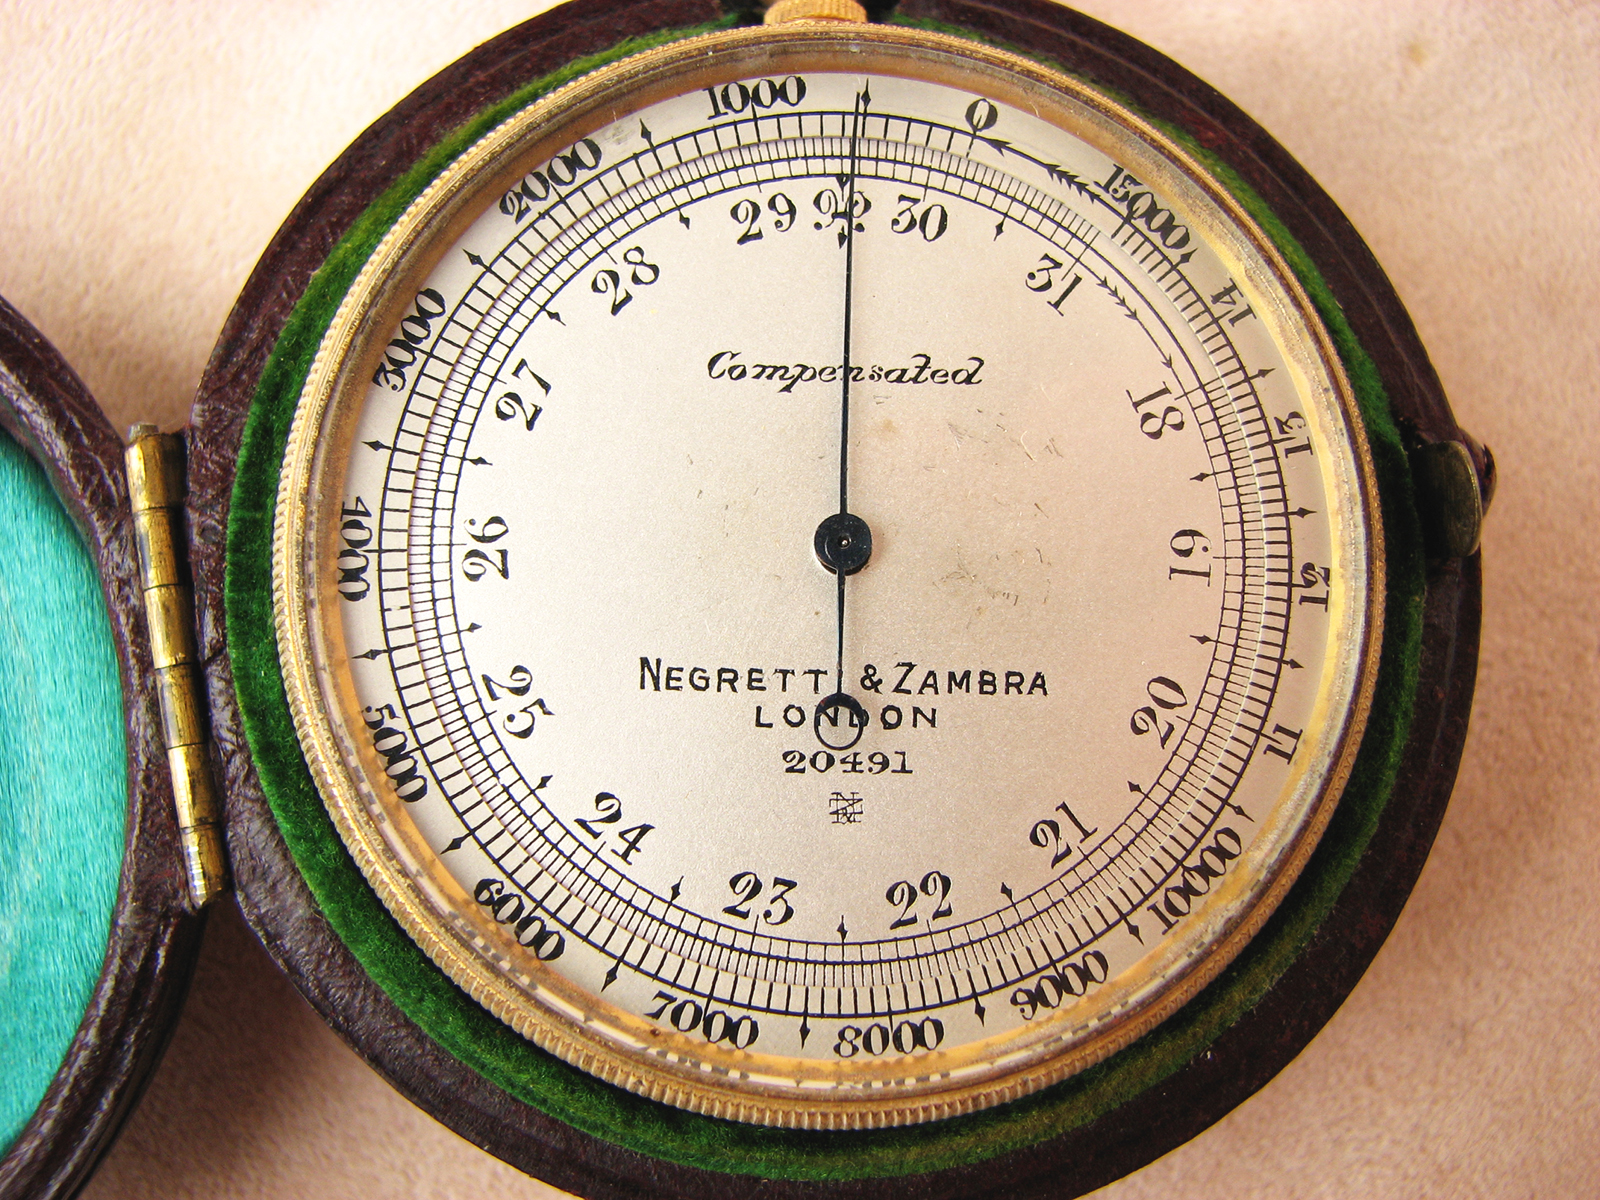 WW1 Royal Flying Corp pocket barometer and altimeter by Negretti & Zambra